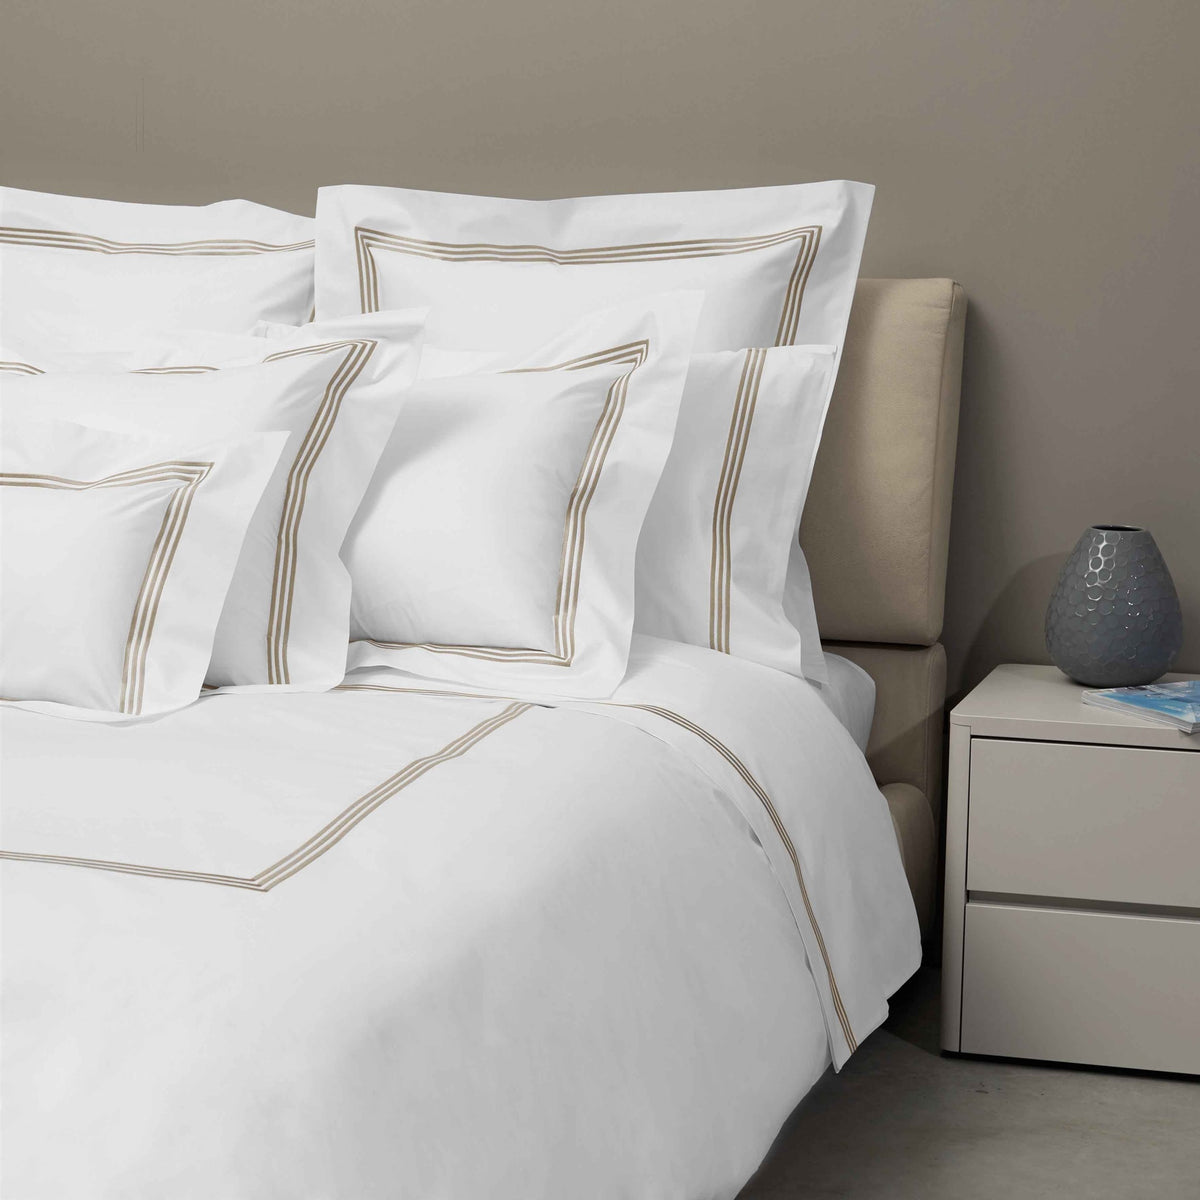 Bed Dressed in Signoria Platinum Percale Bedding in White/Taupe Color